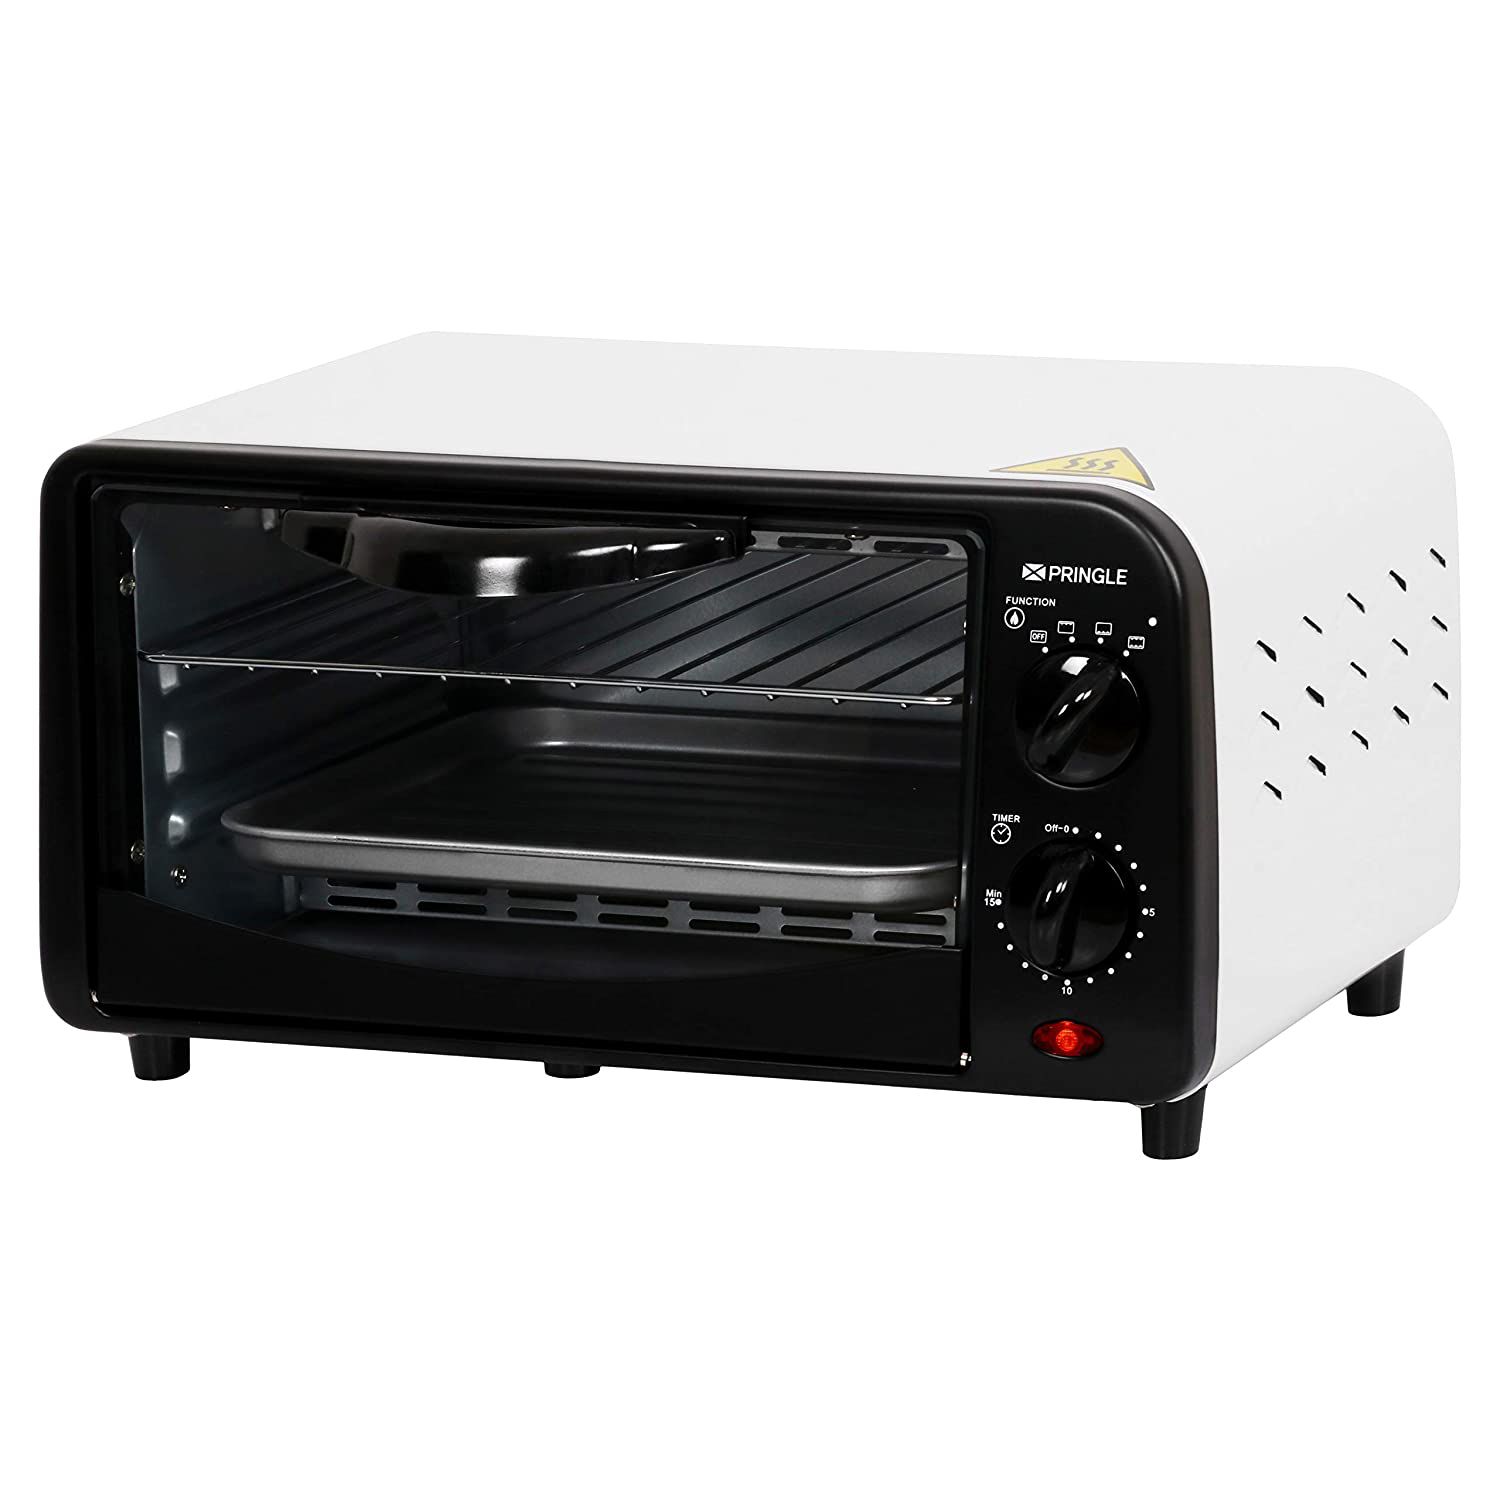 Pringle Oven Toaster Griller 10L Capacity- OTG12 (Black)